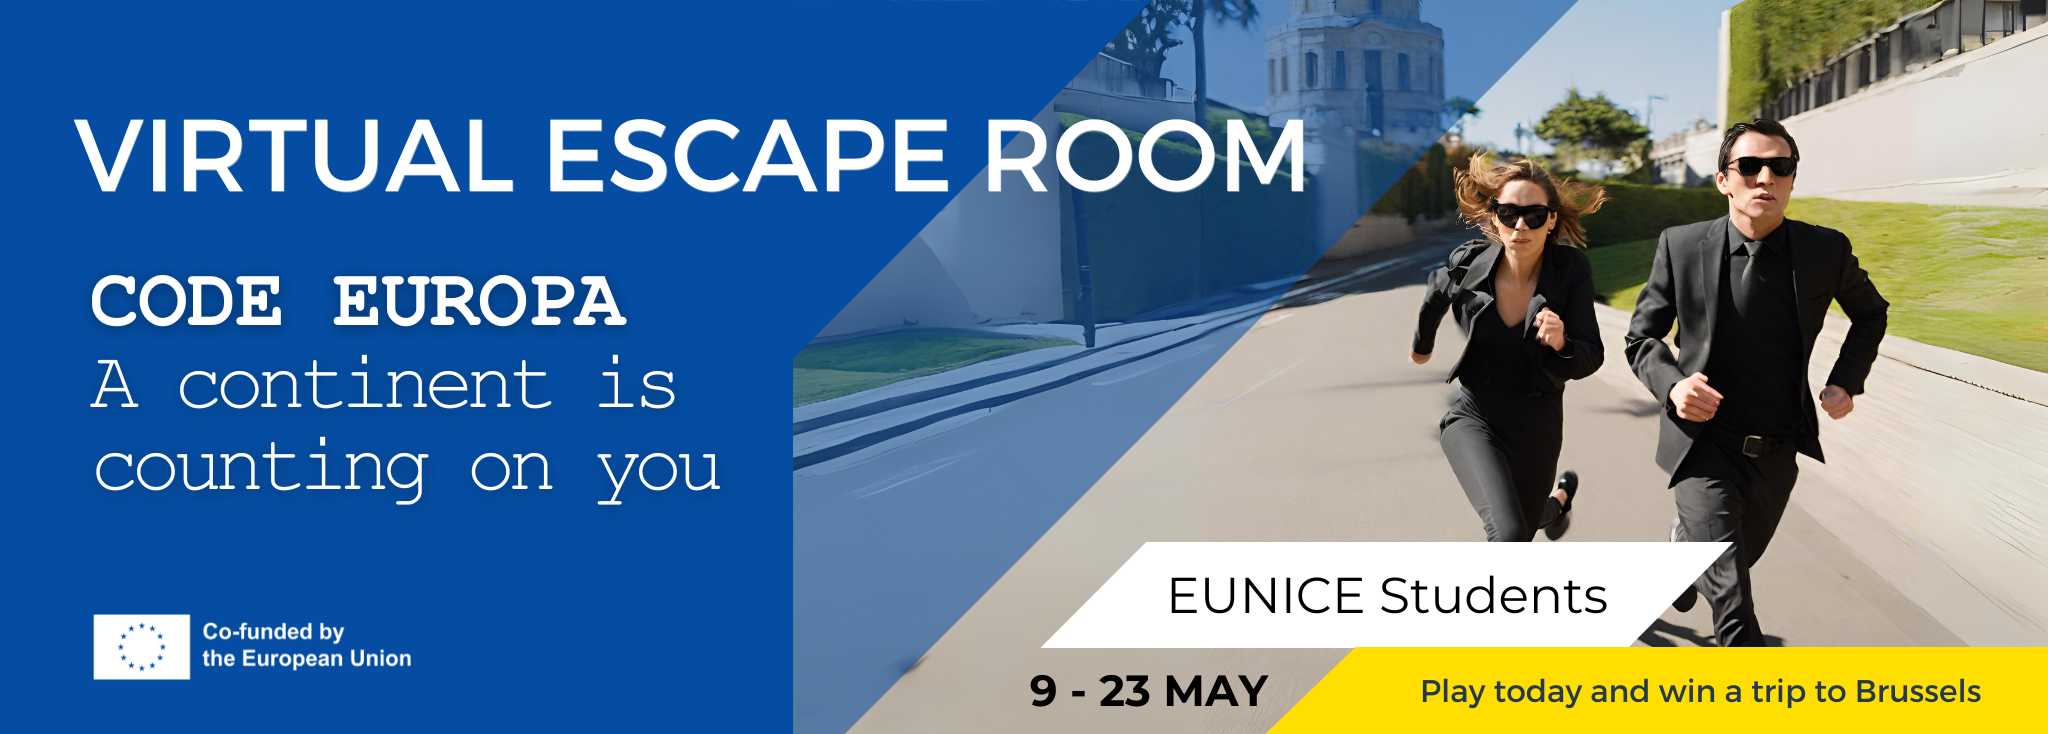 virtual escape room_code europa.jpg